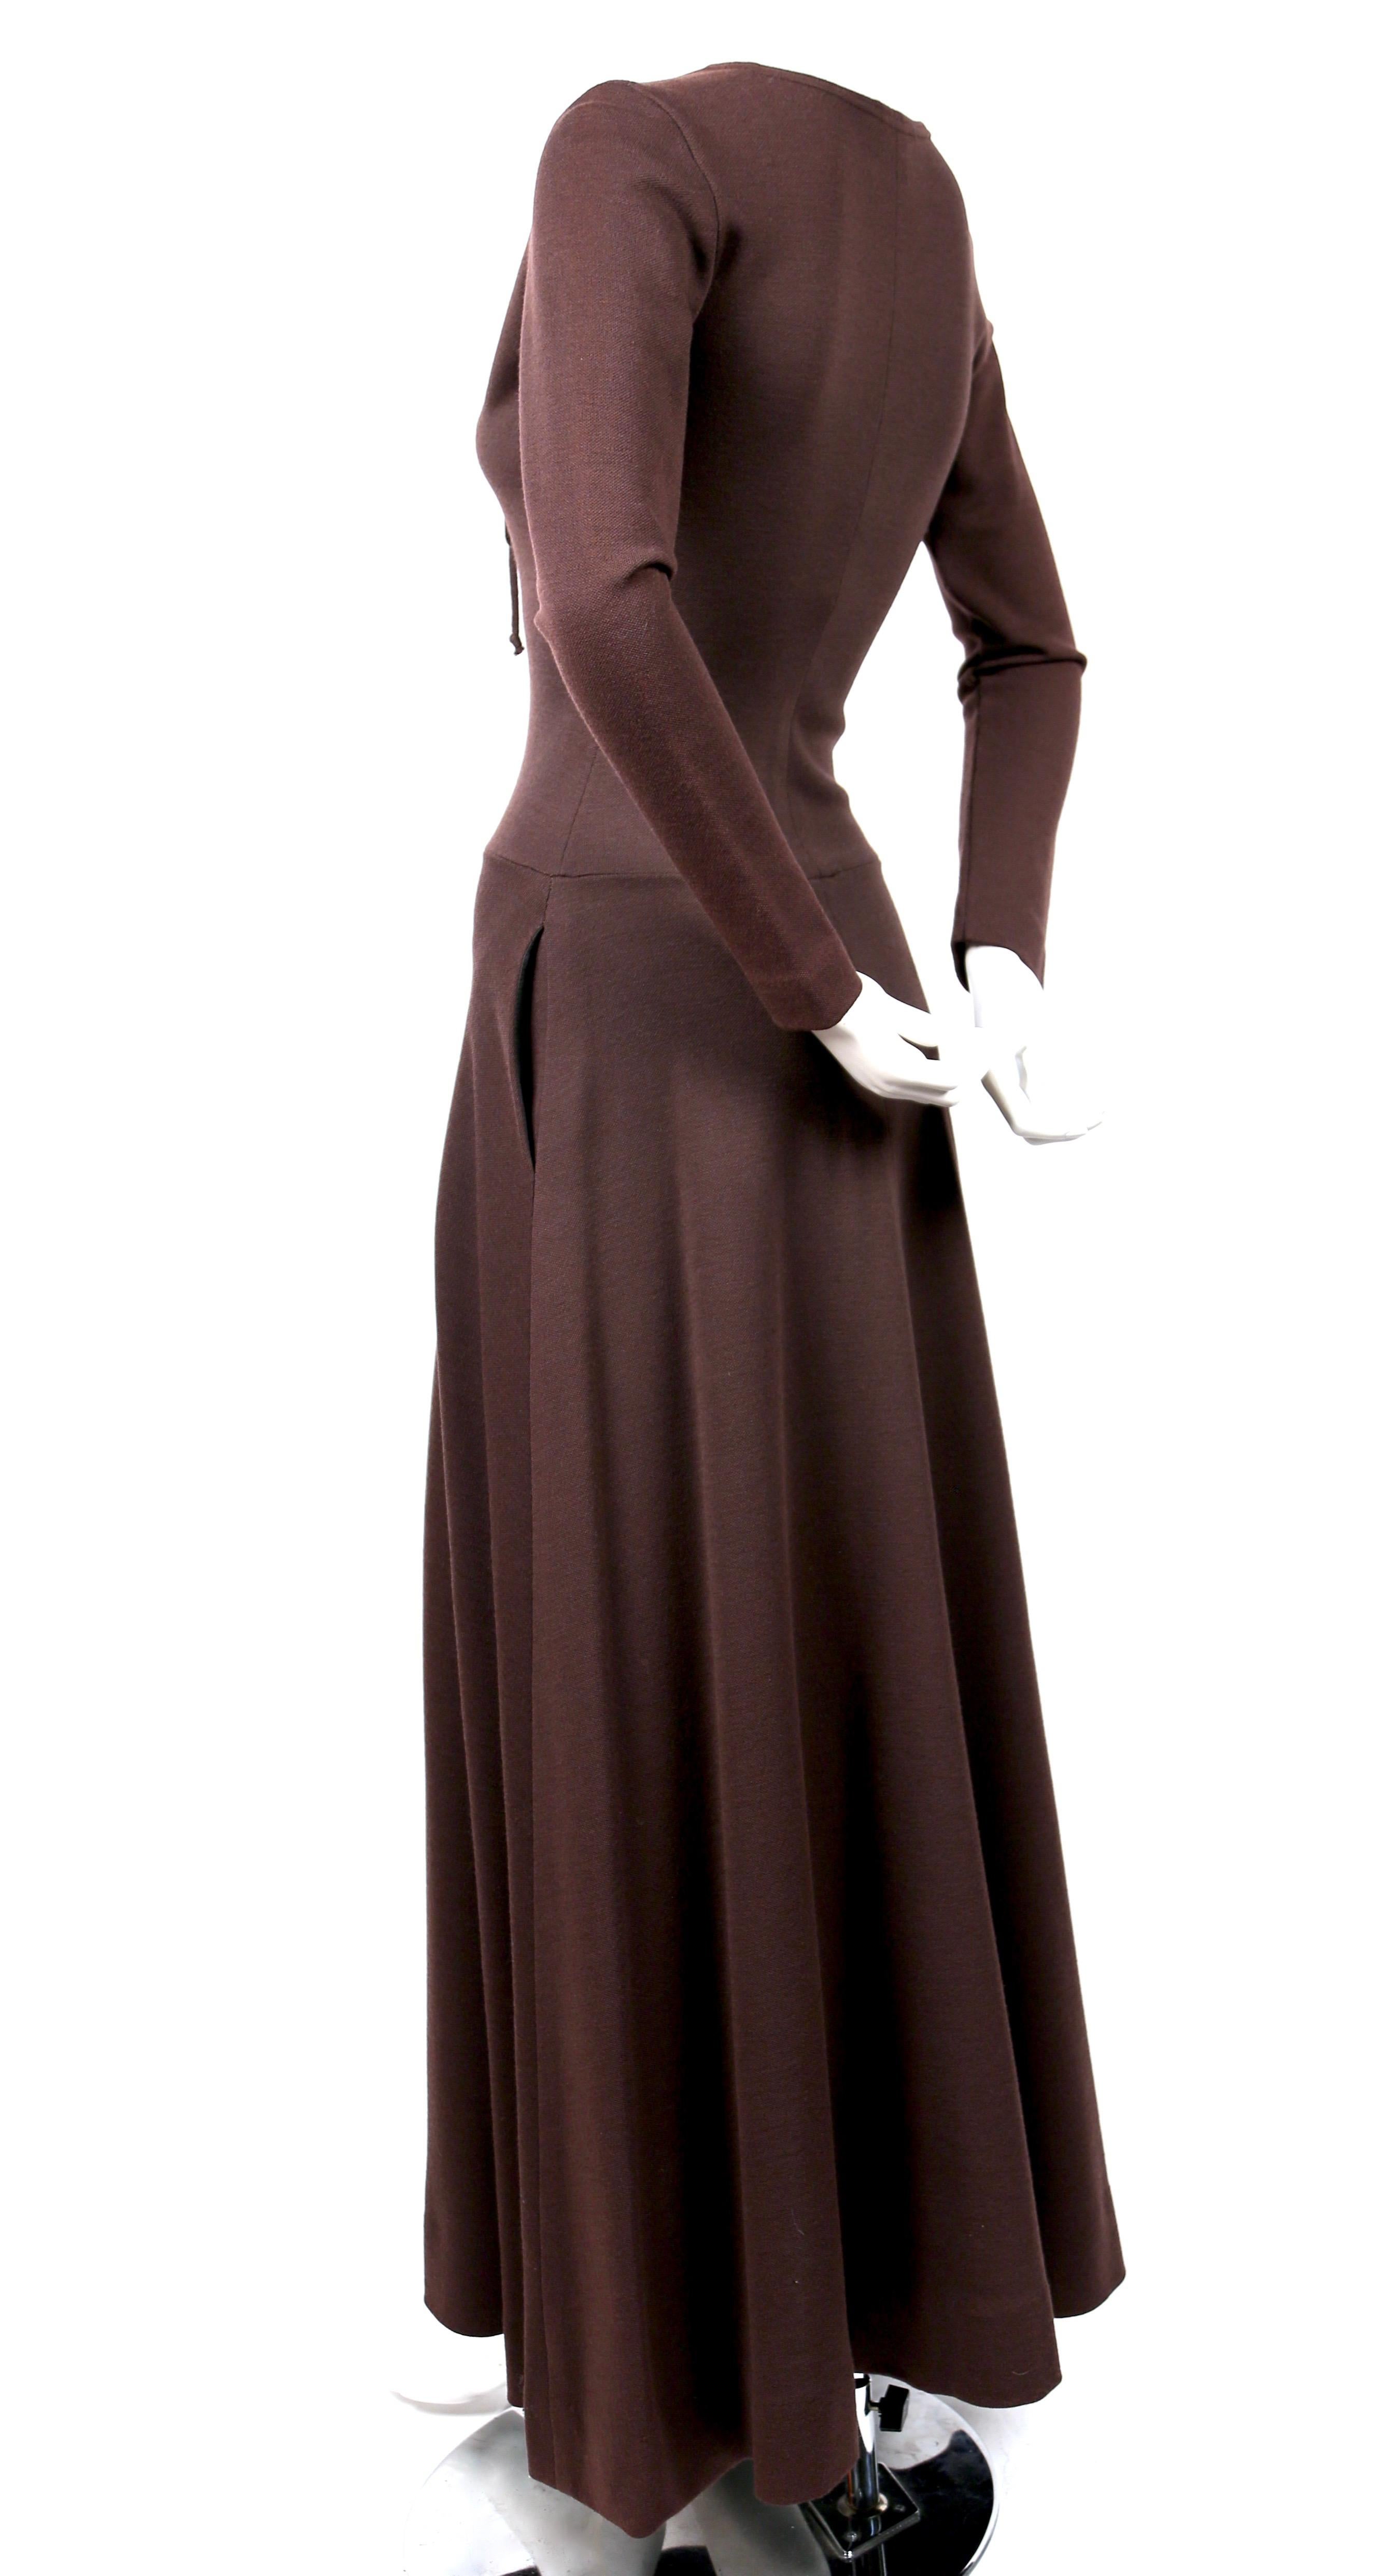 Women's or Men's 1960's RUDI GERNREICH dress with plunging neckline For Sale